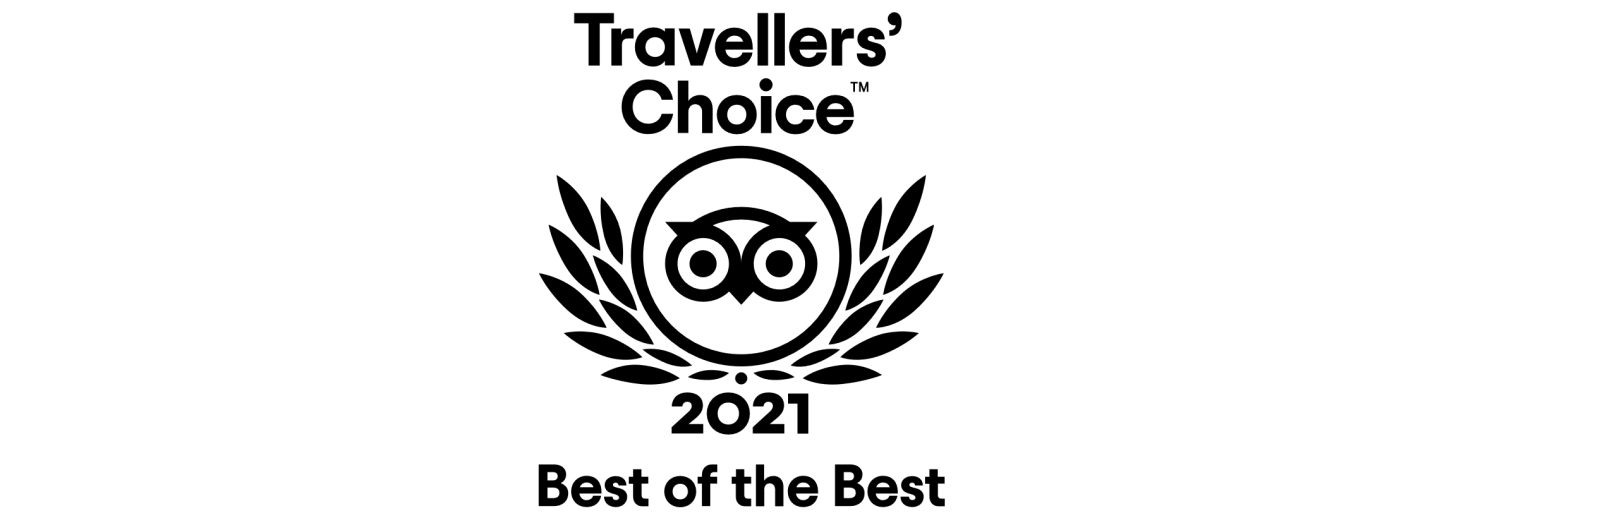 TripAdvisor Travellers' Choice logo banner